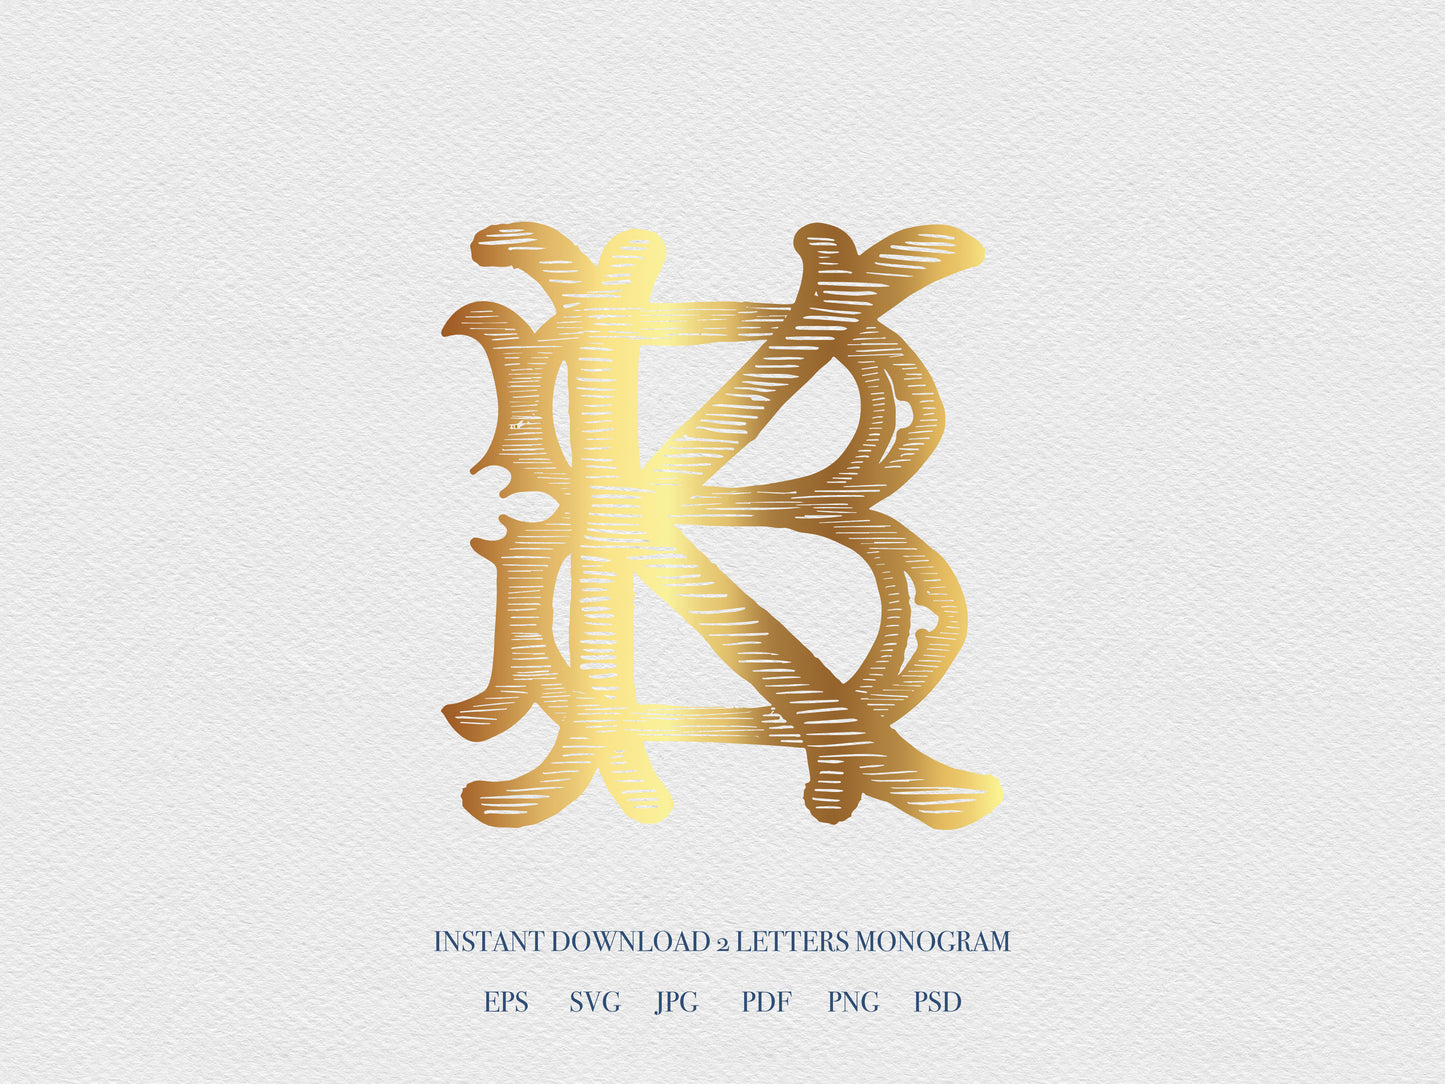 2 Letter Monogram with Letters BK KB | Digital Download - Wedding Monogram SVG, Personal Logo, Wedding Logo for Wedding Invitations The Wedding Crest Lab